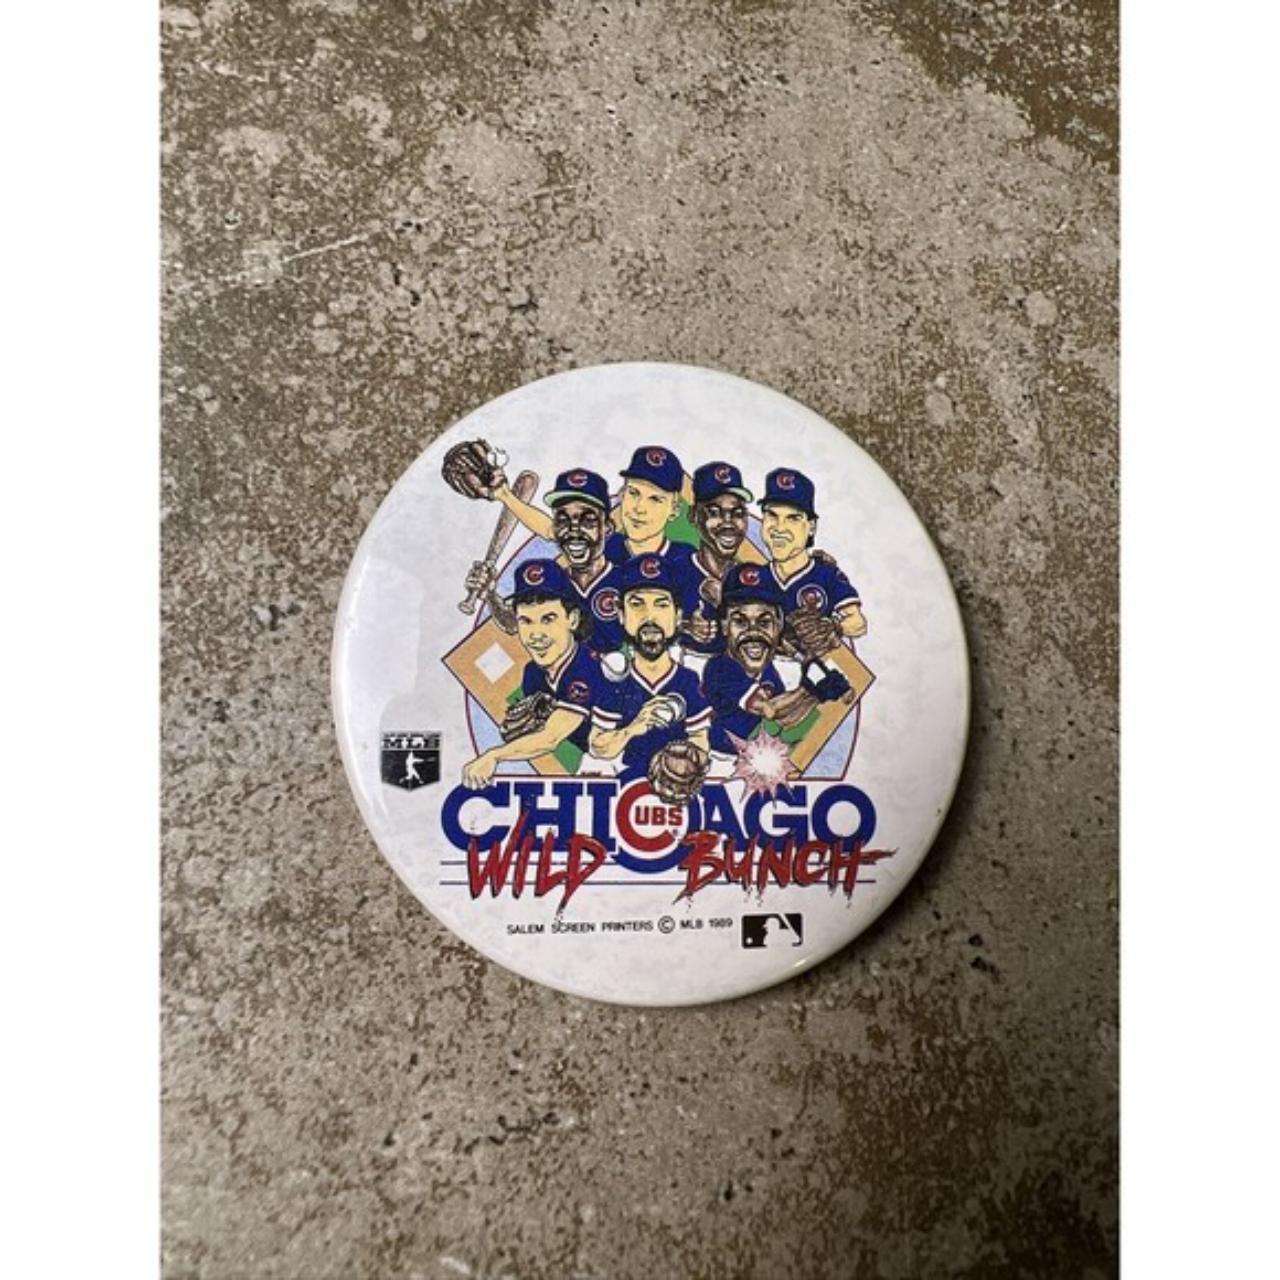 Chicago Cubs Vintage Logo Pin